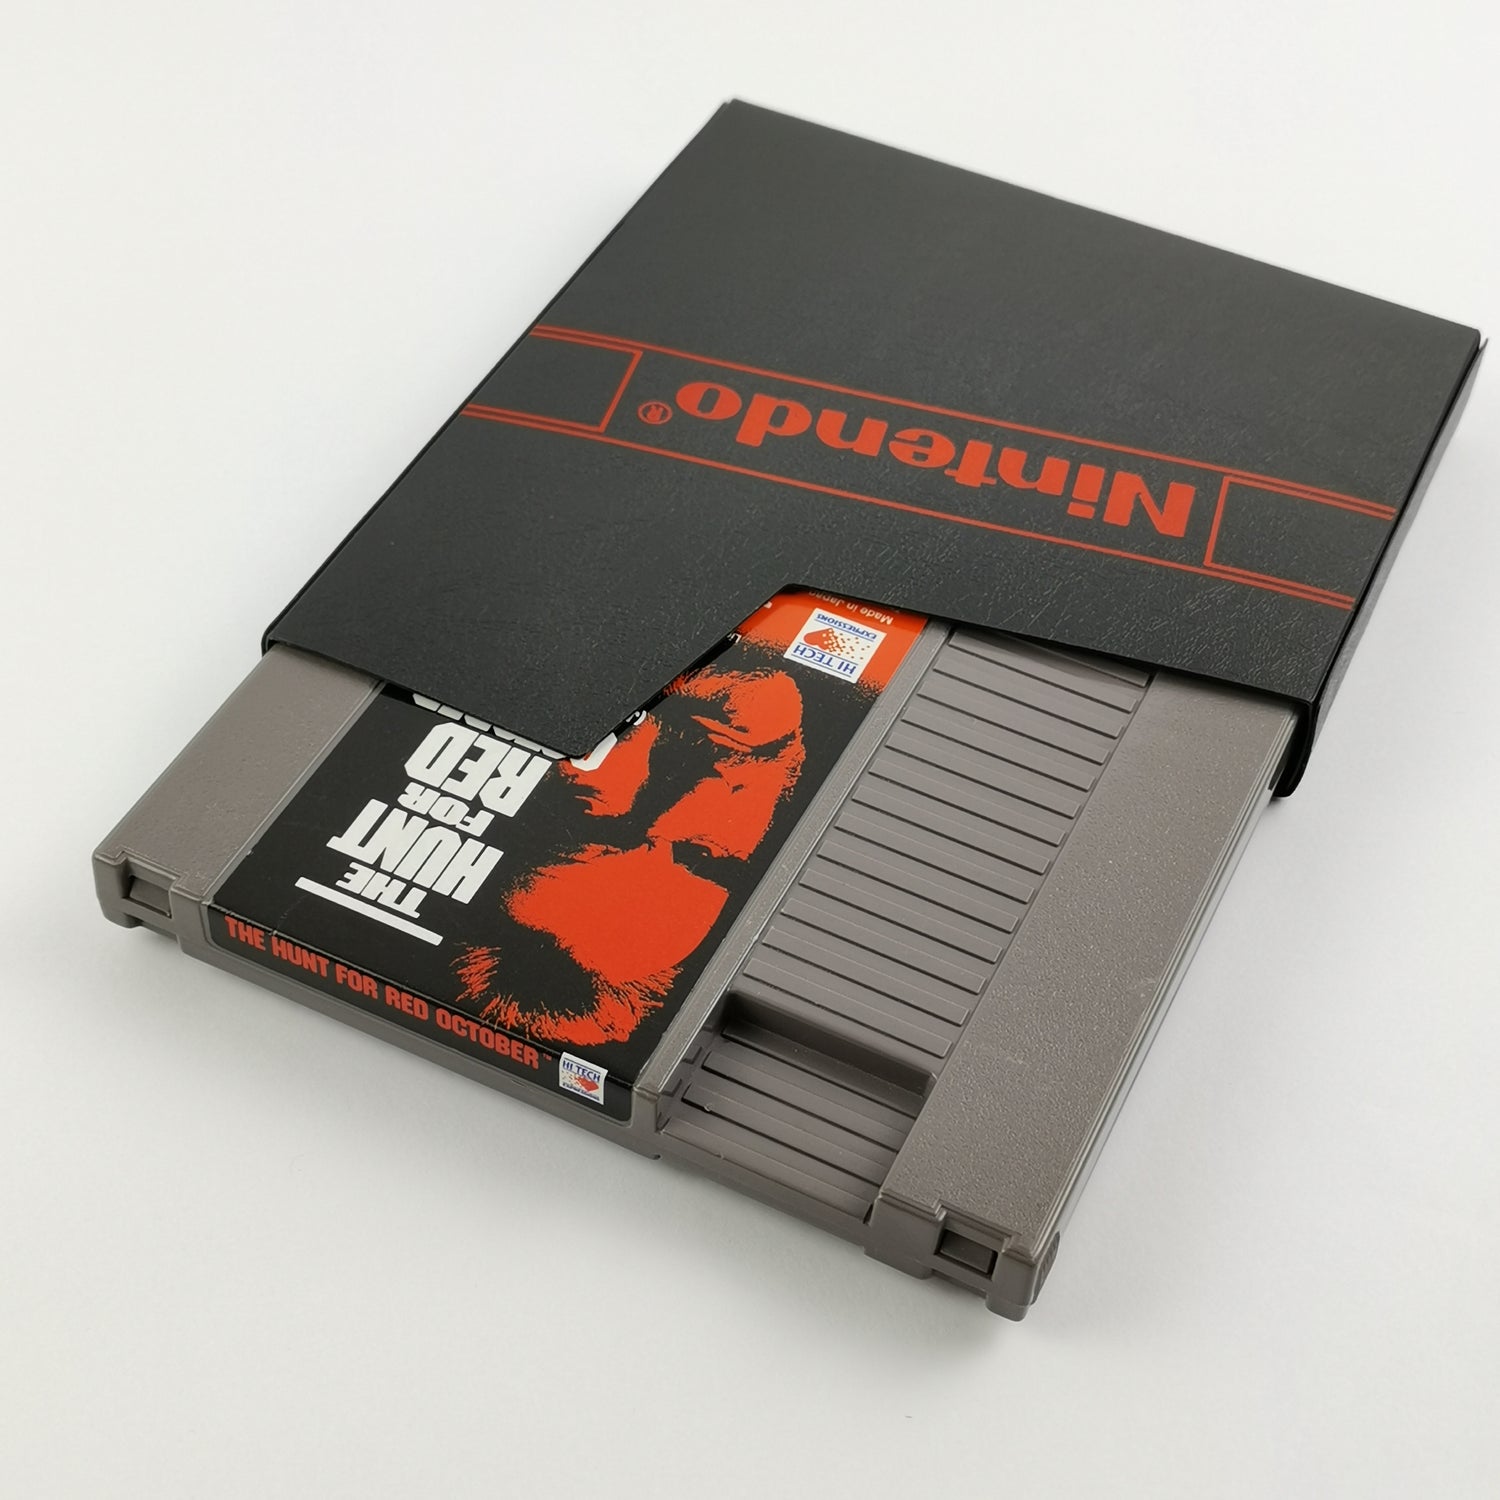 Nintendo NES Game: The Hunt for Red October - Module Cartridge | PAL FRG